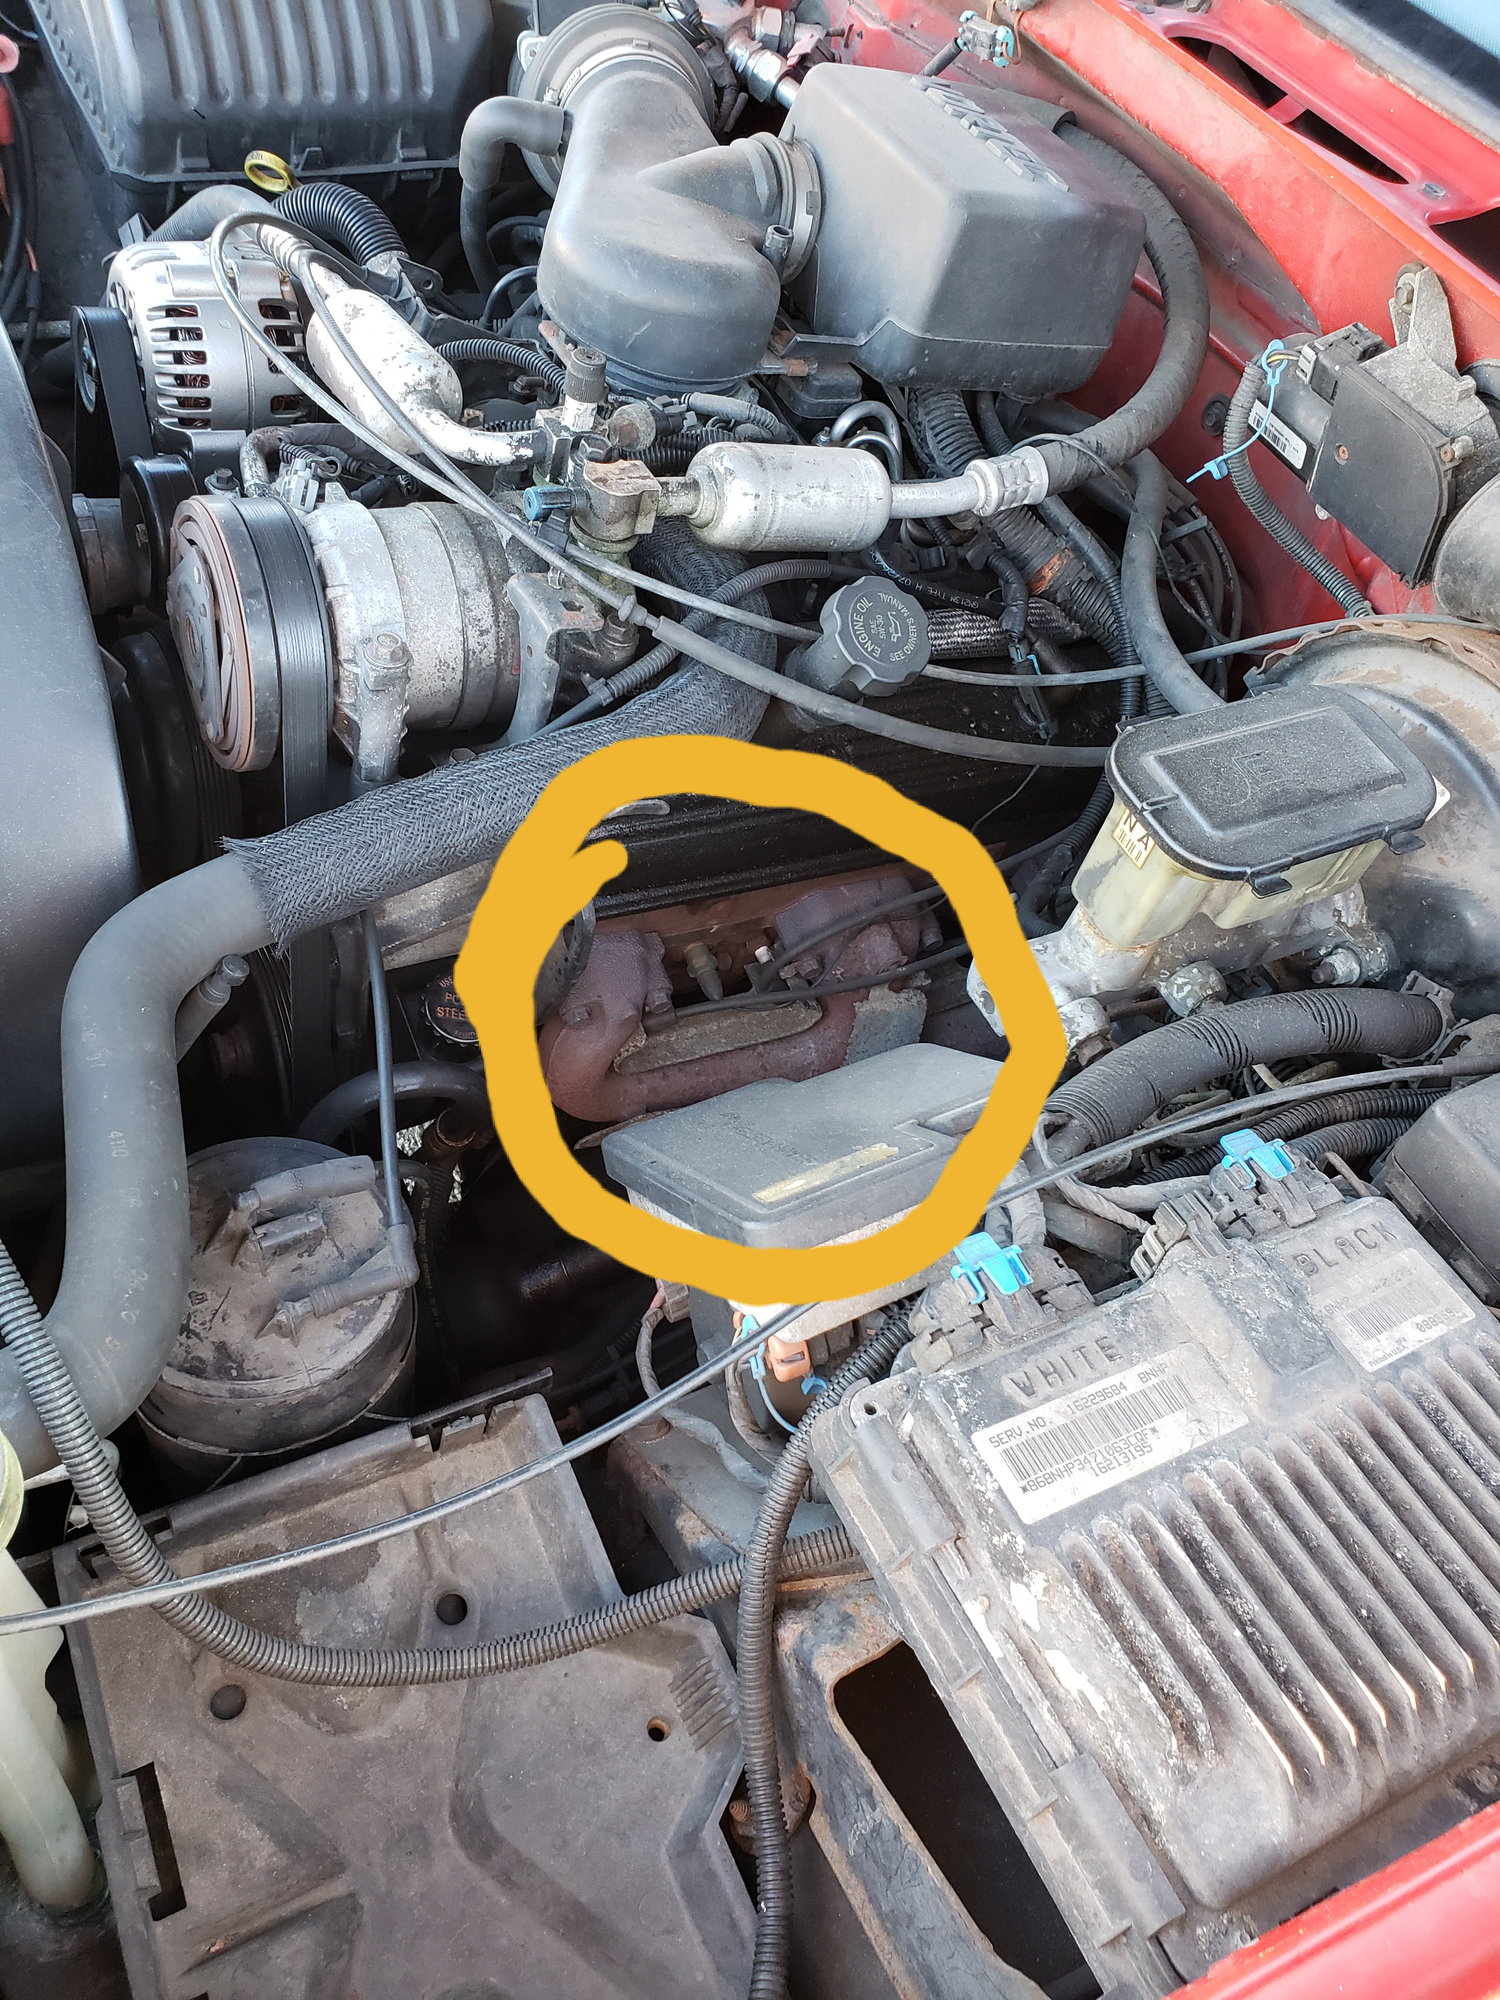 1997 Suburban Engine part identification - Chevrolet Forum - Chevy